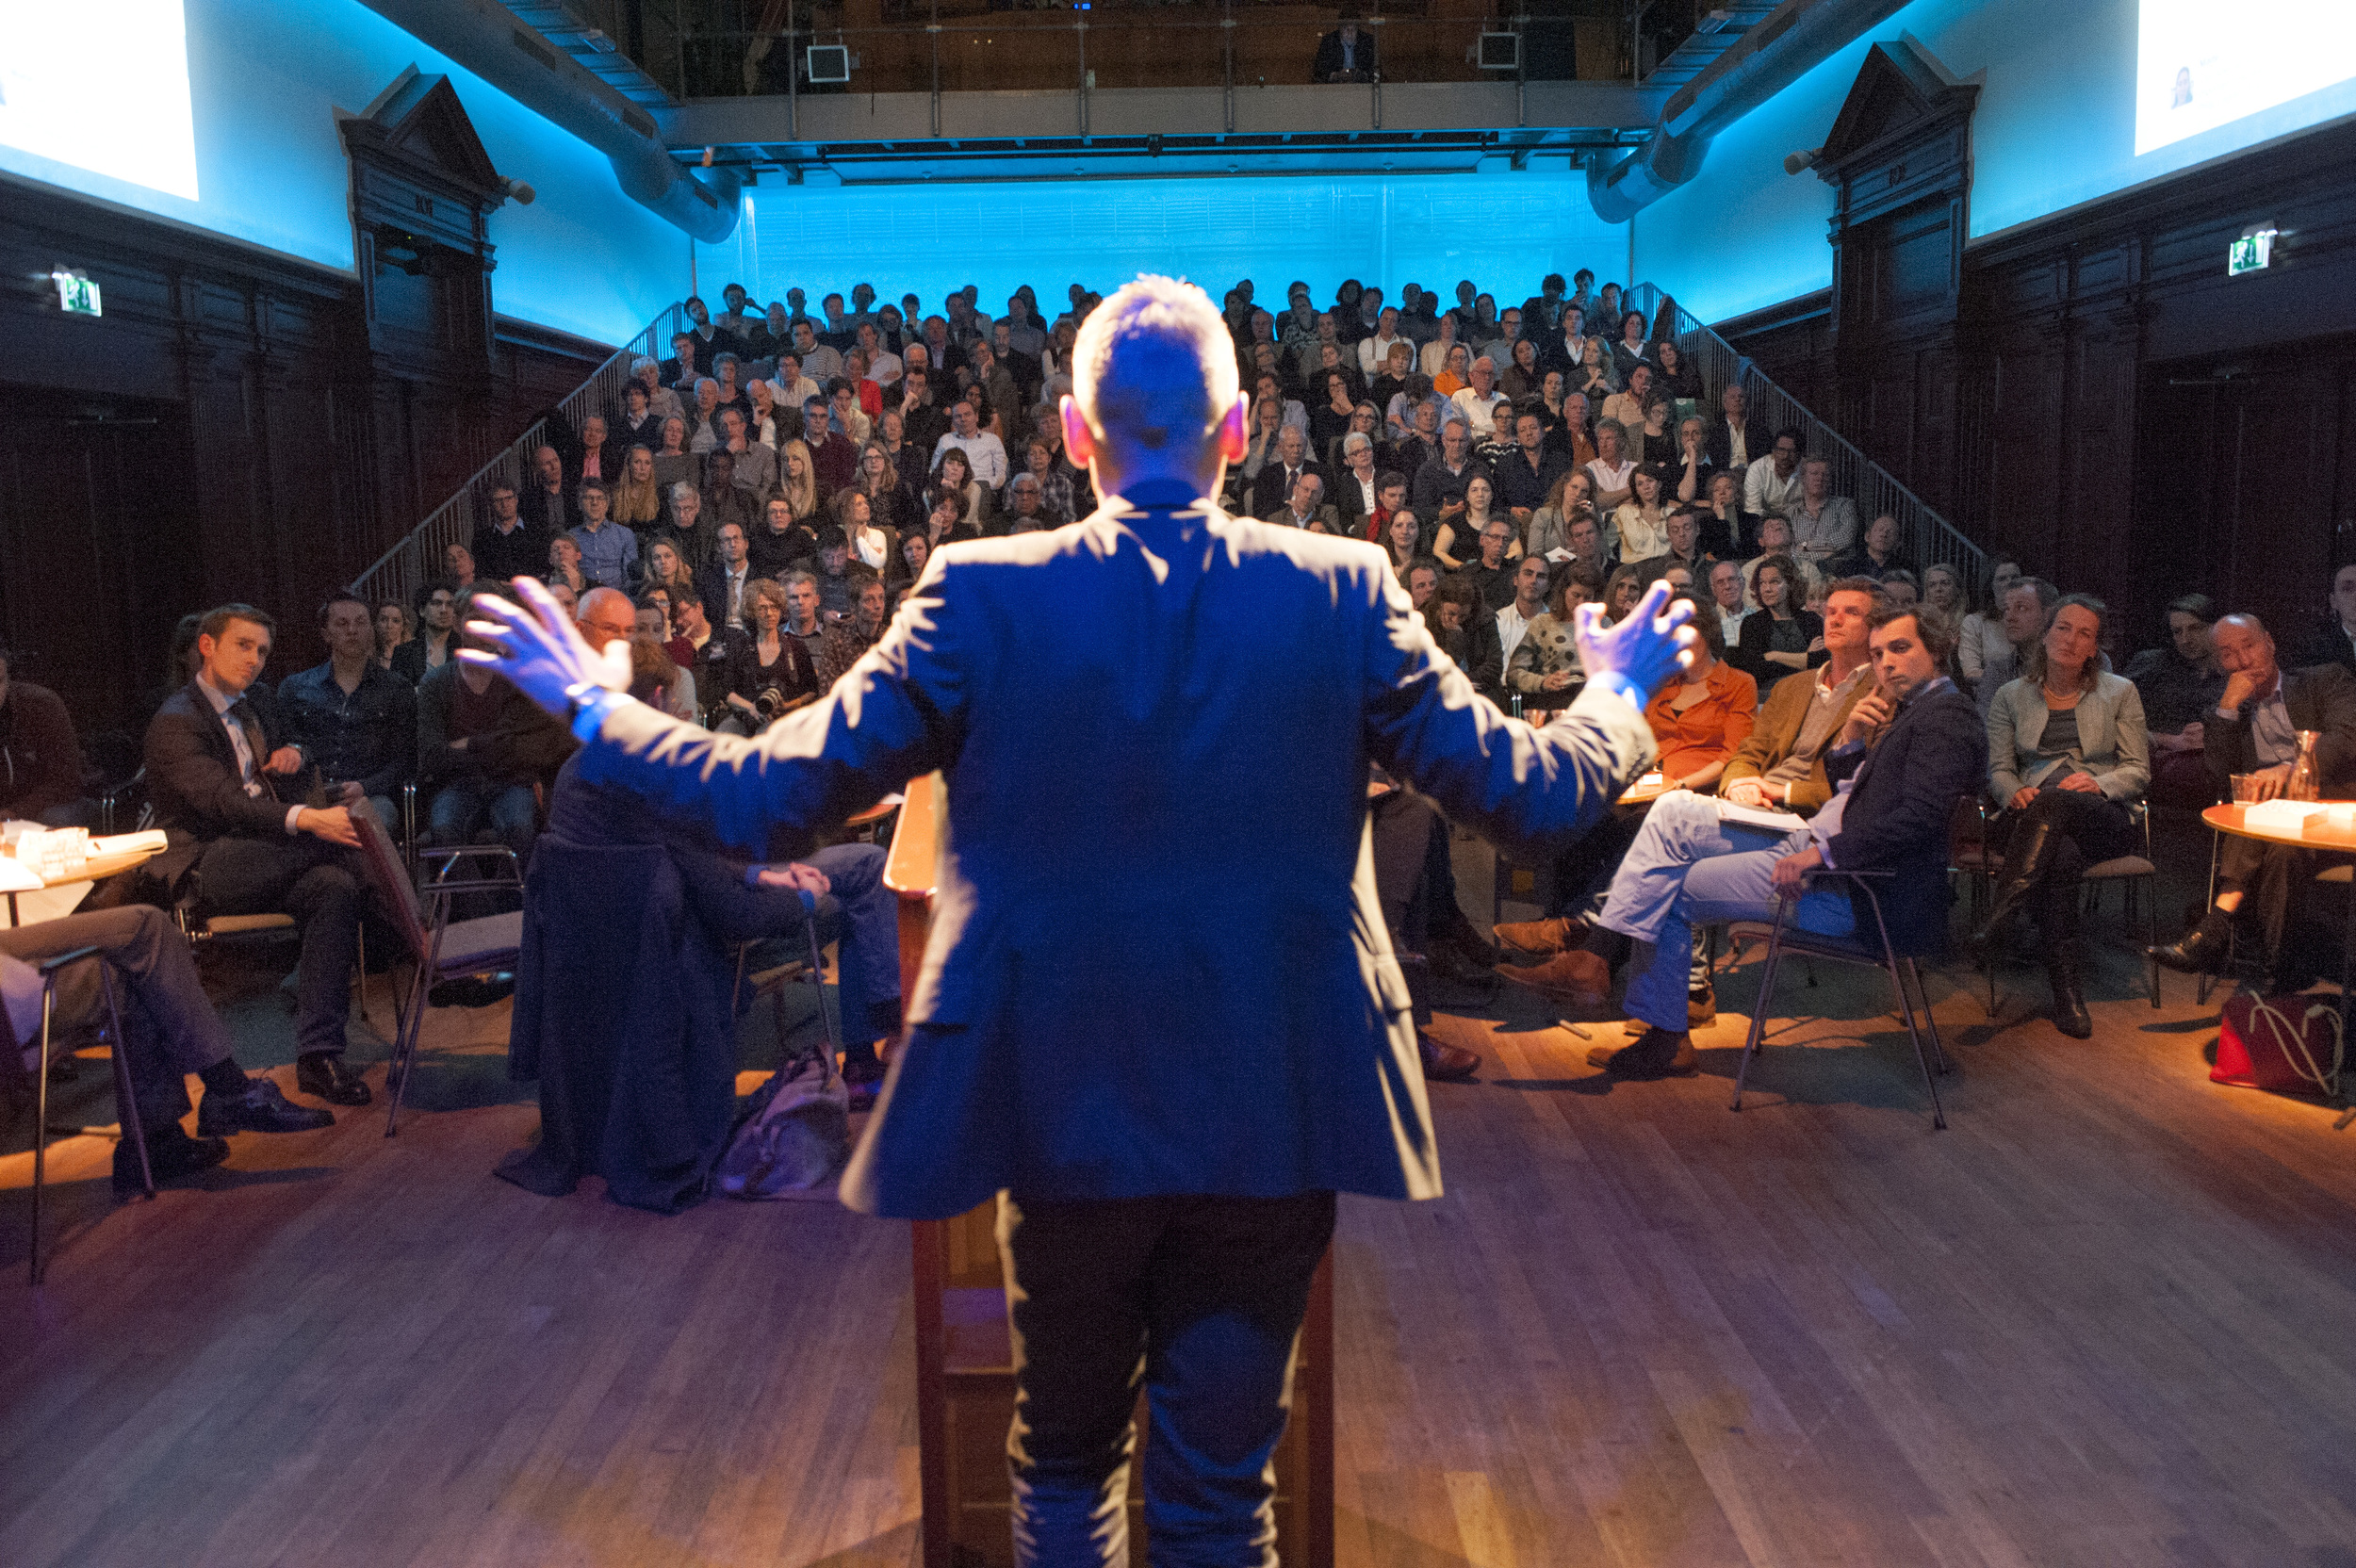  Keynote speaker Philippe Legrain in front of a full room at De Balie, Amsterdam ©Jan Boeve 